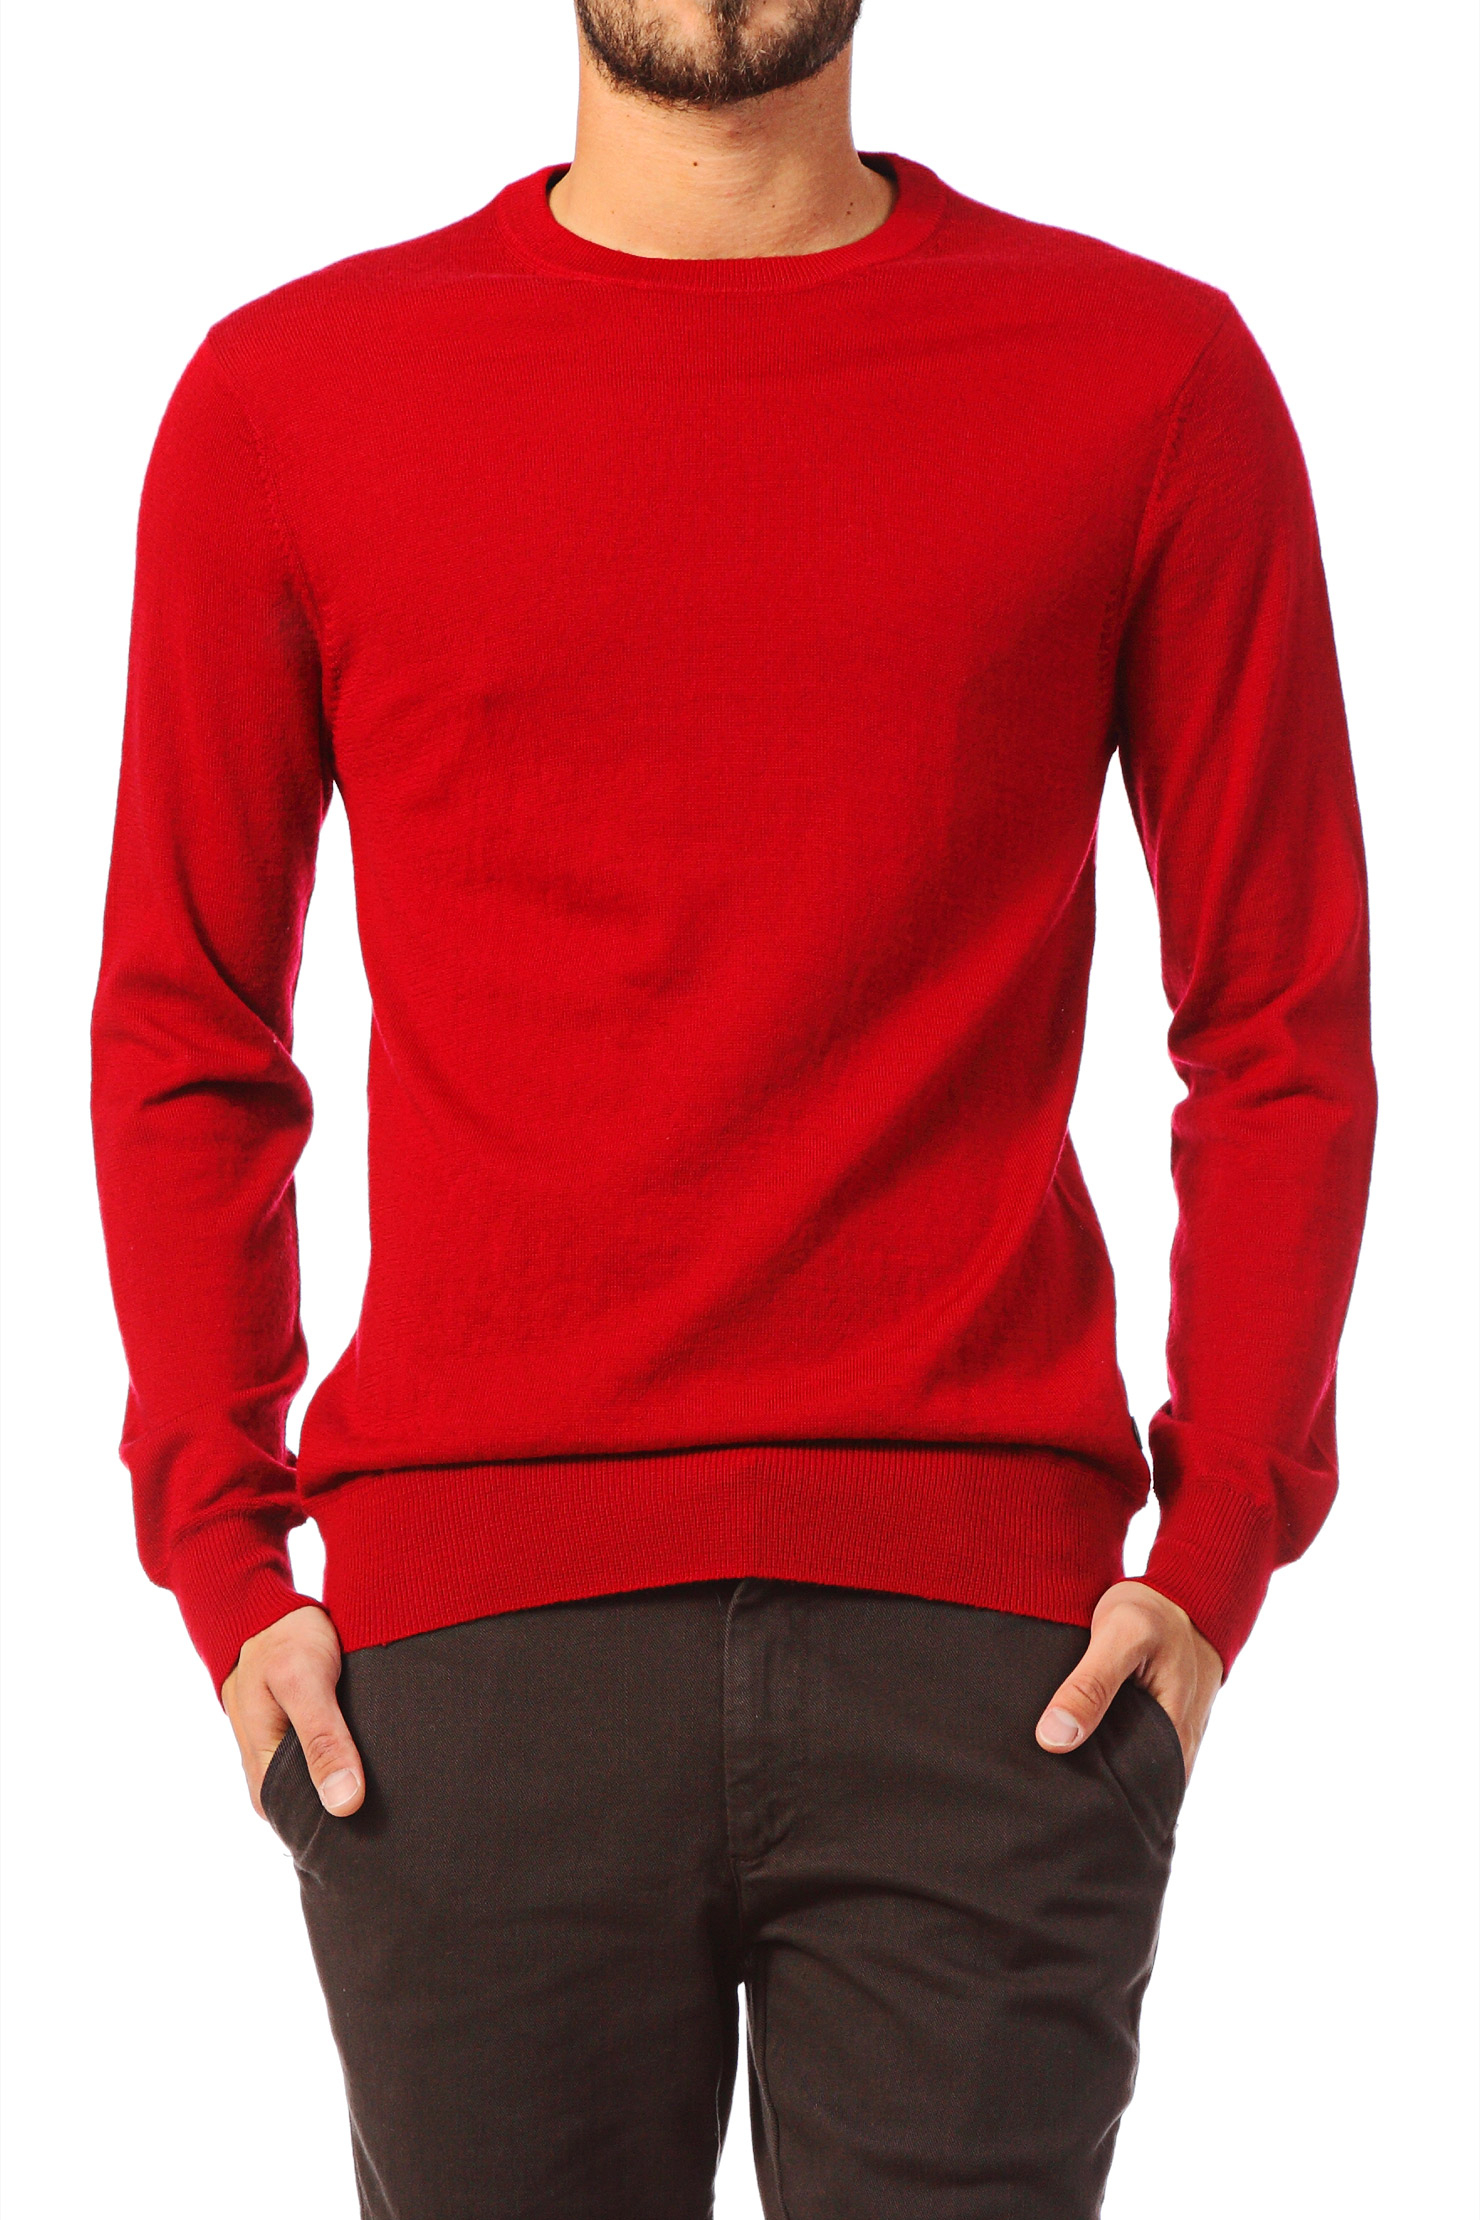 Scotch & soda Classic Merino Wool Crew Neck Sweater in Red for Men ...